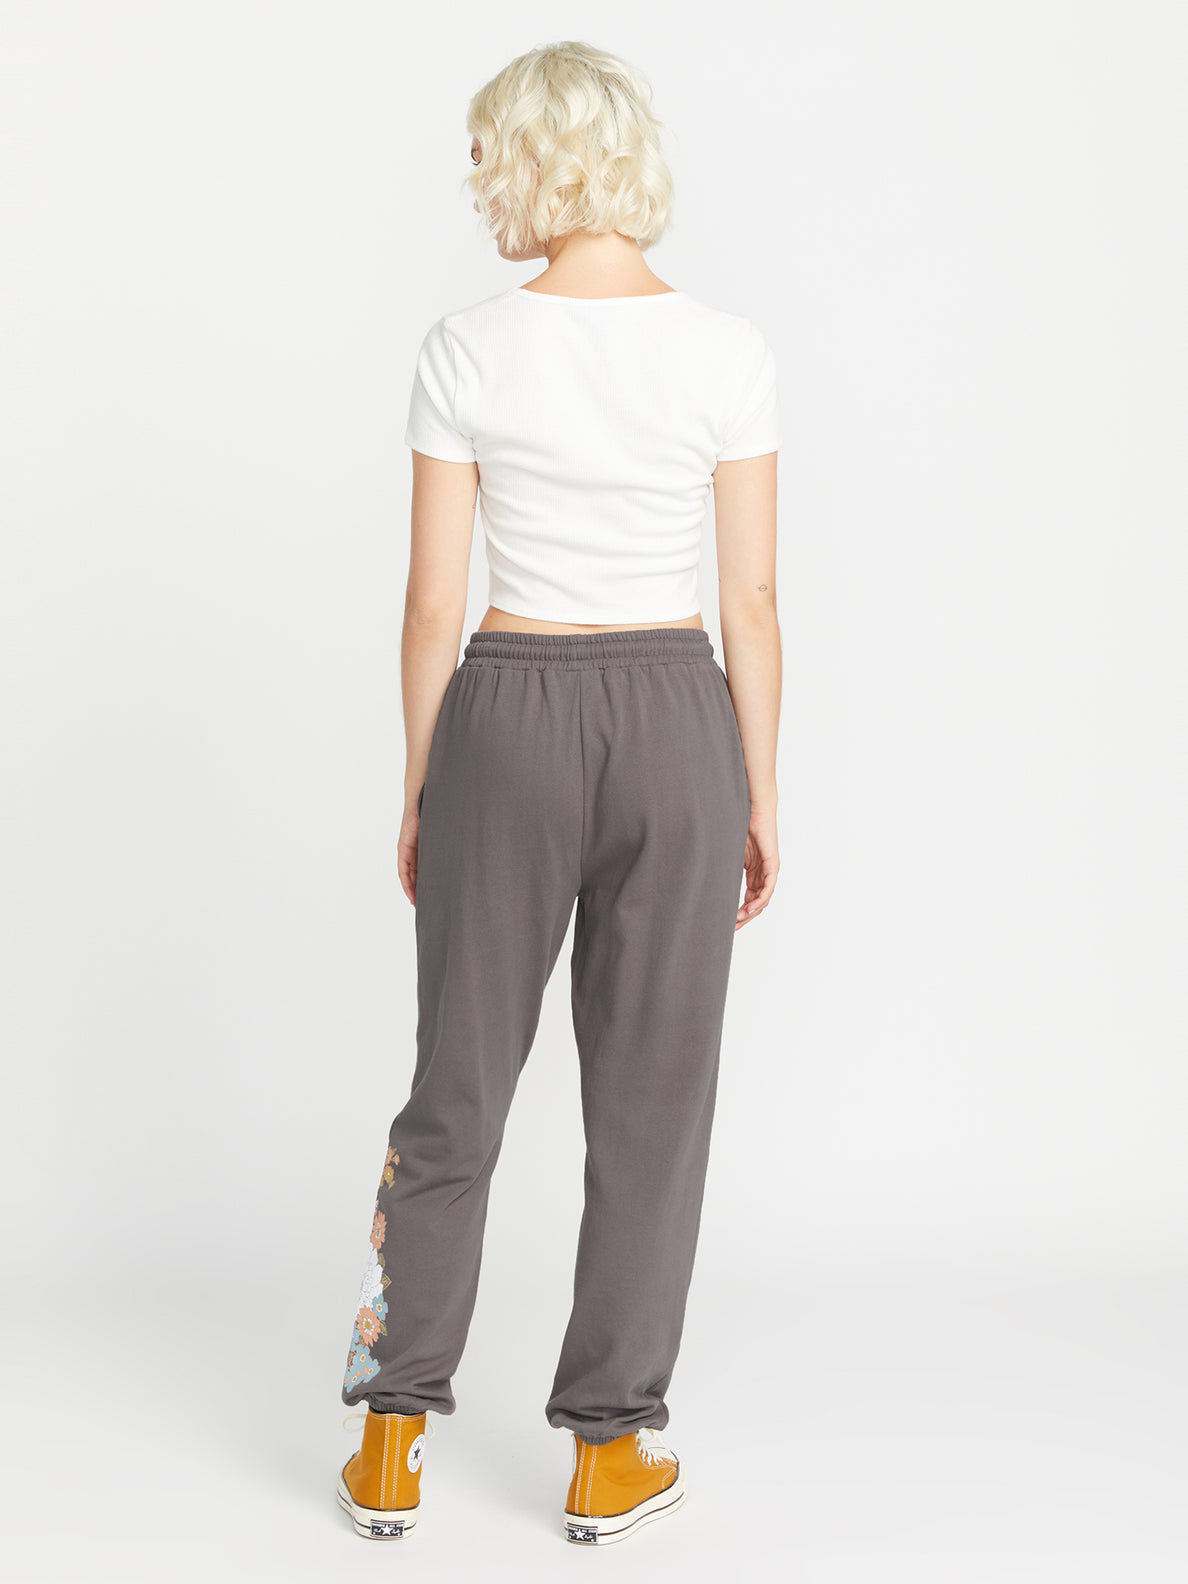 Truly Stoked Pants - Slate Grey (B1232202_SLT) [B]